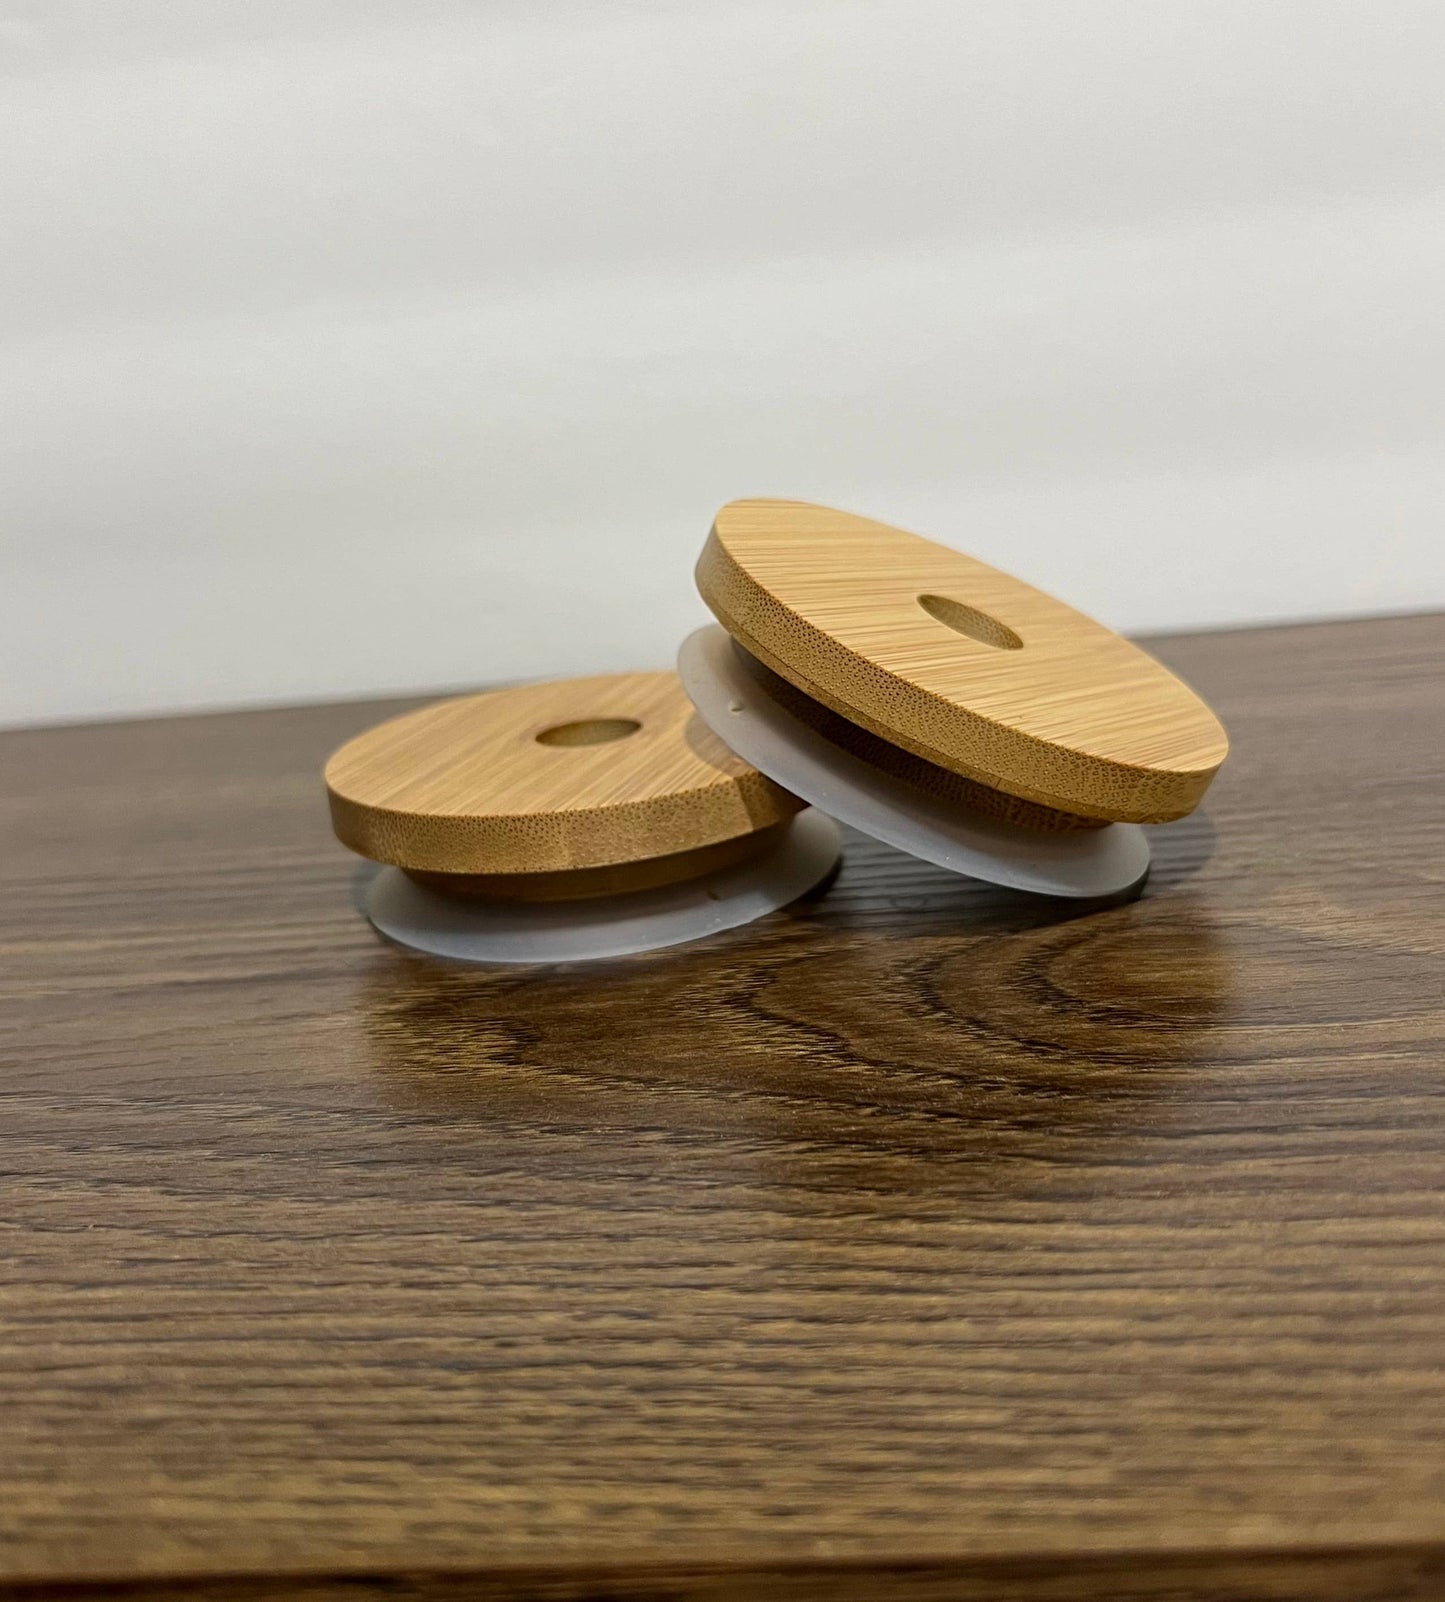 Mason Jar Designs - Bamboo lids